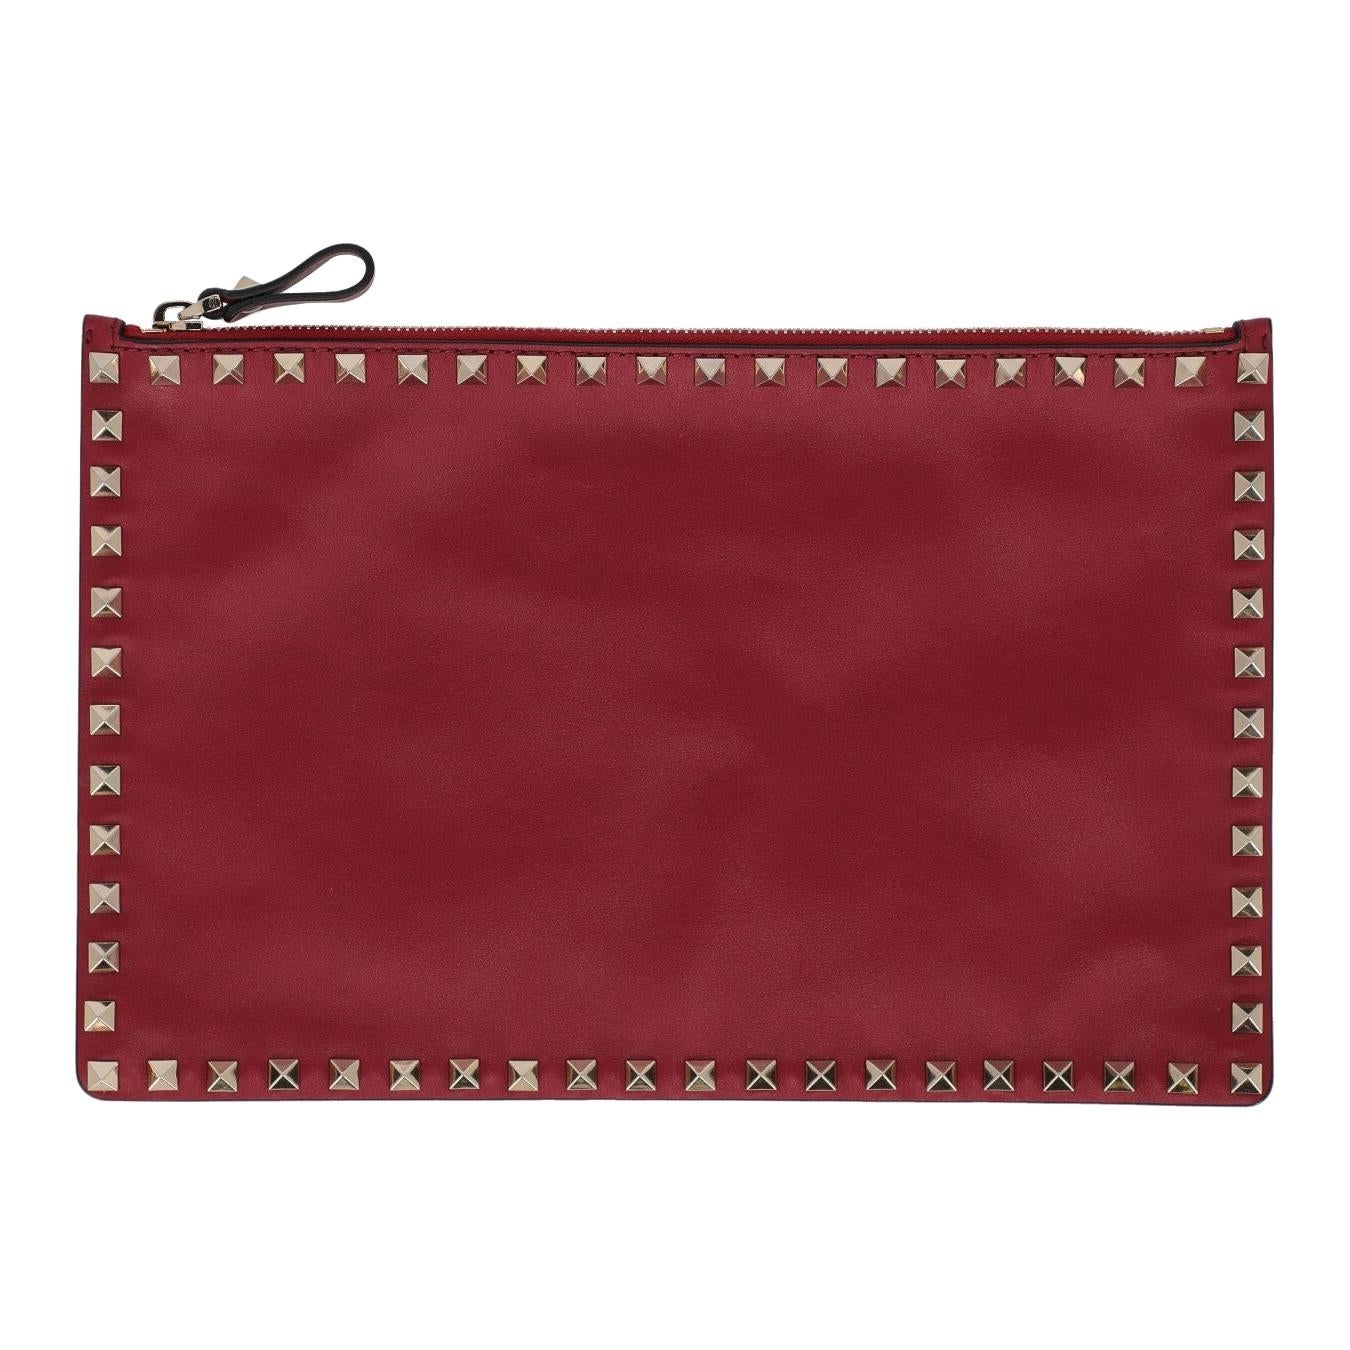 Valentino Woman Handbag Rockstud Red Leather For Sale